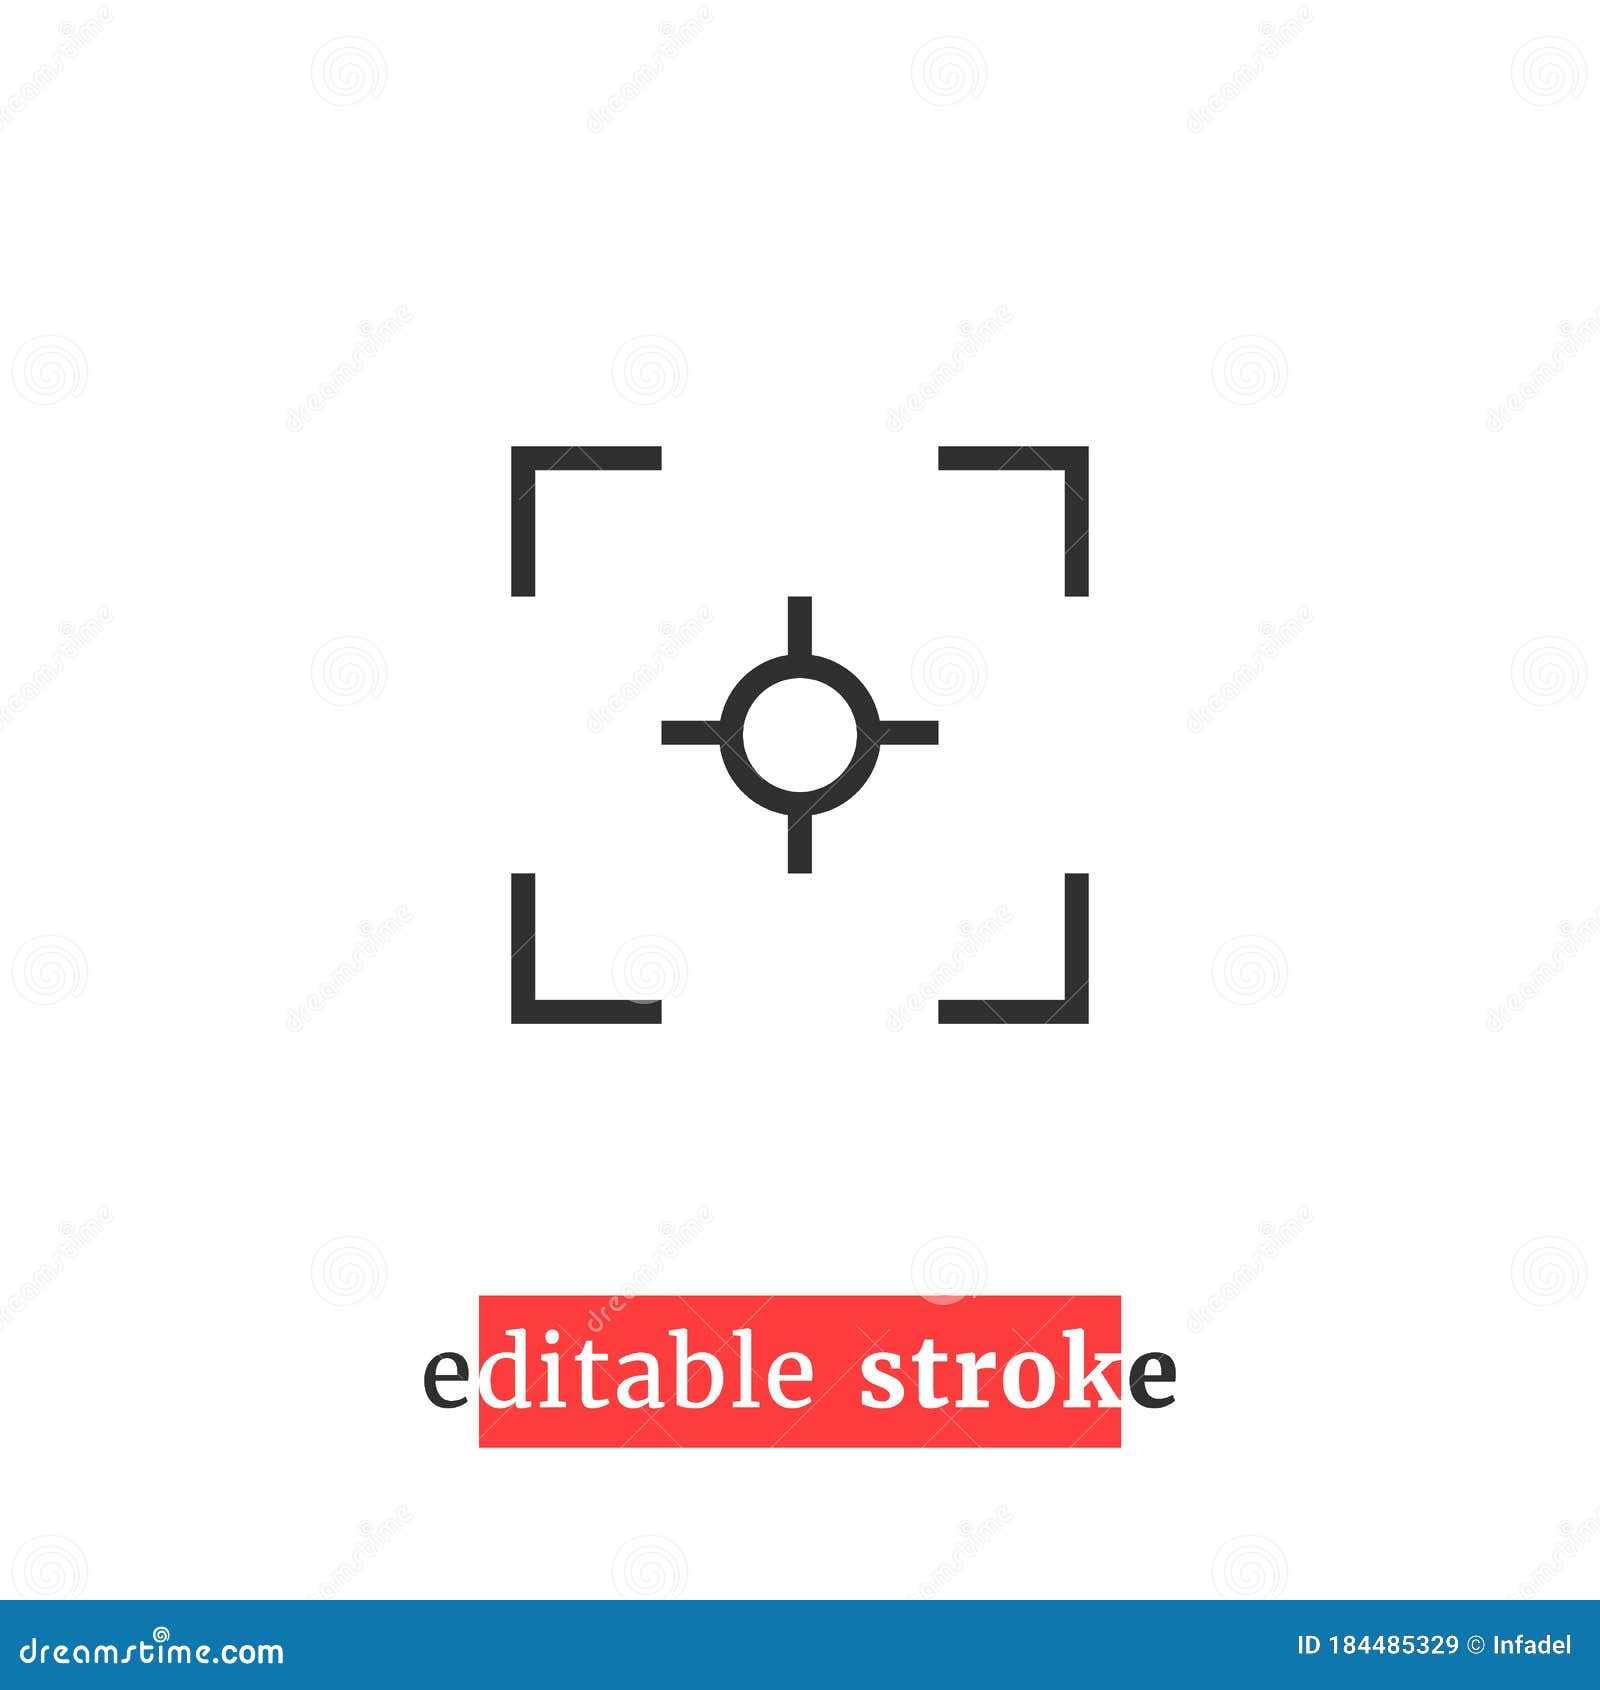 minimal editable stroke capture icon